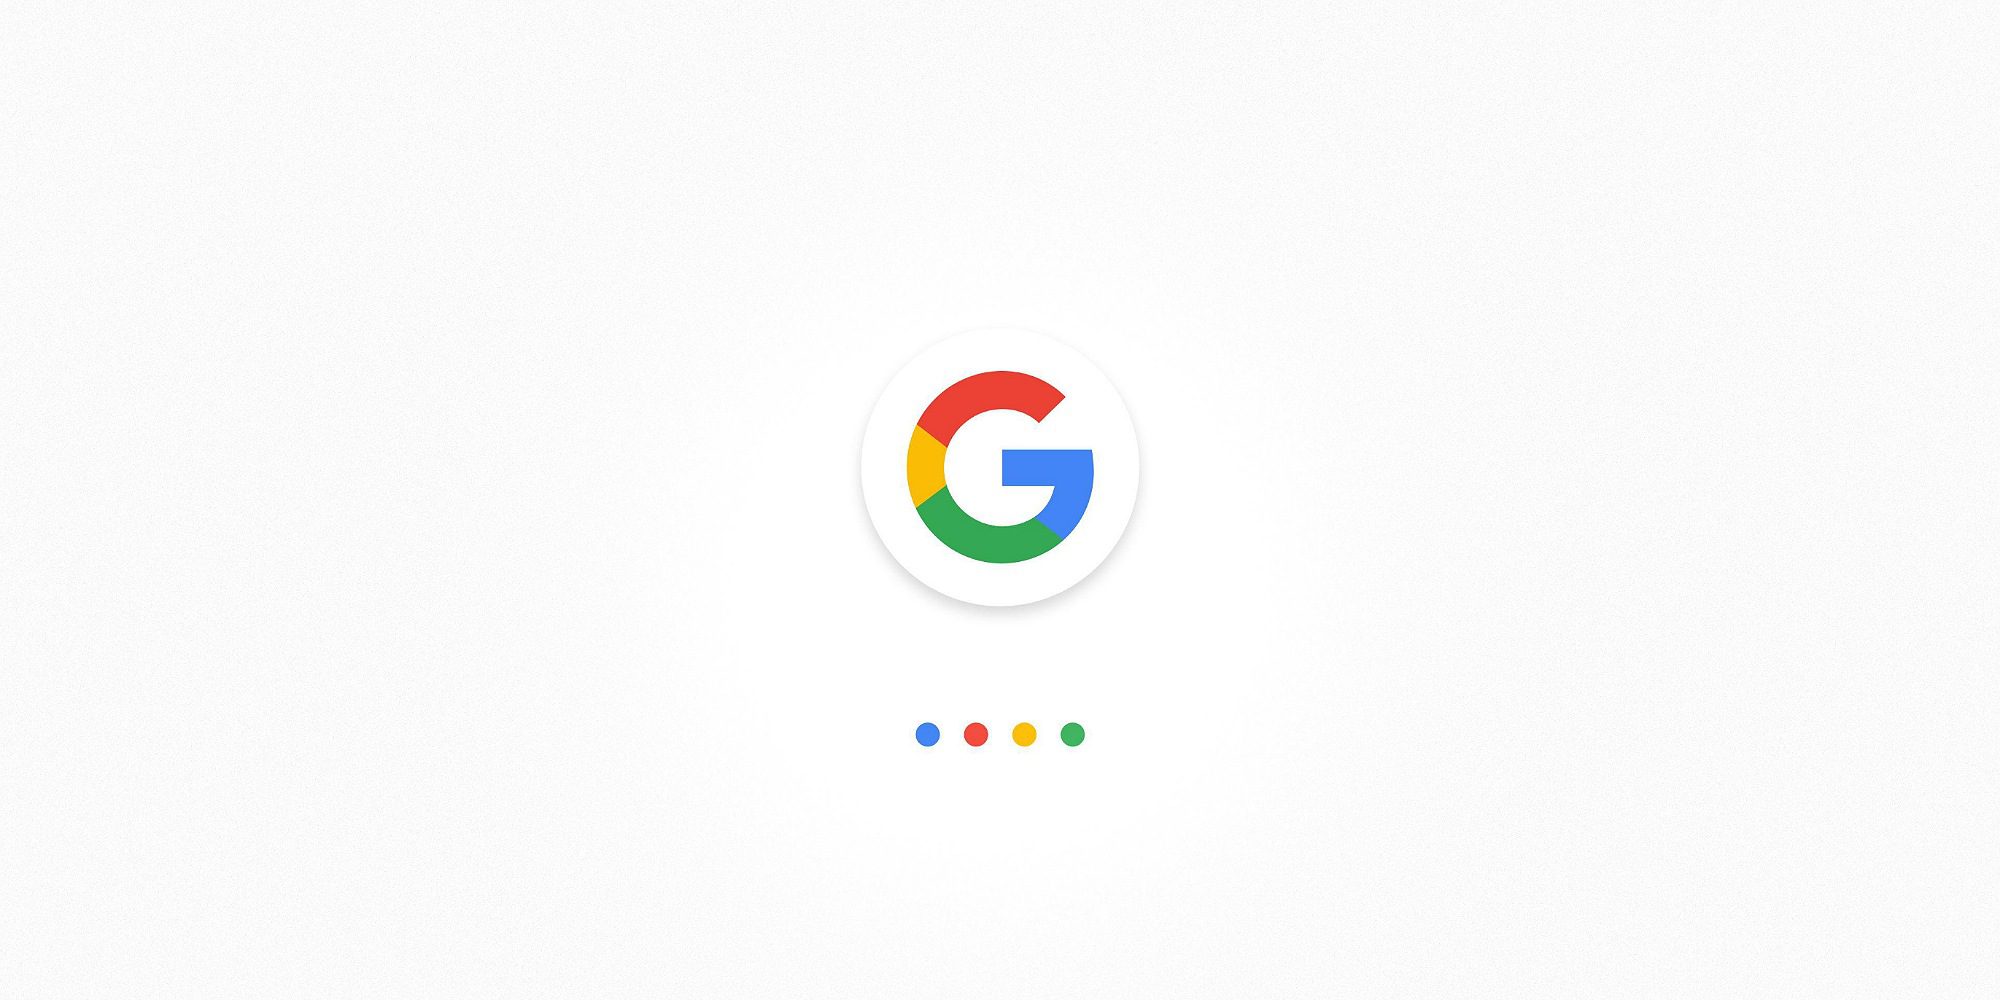 سرچ گوگل - Google